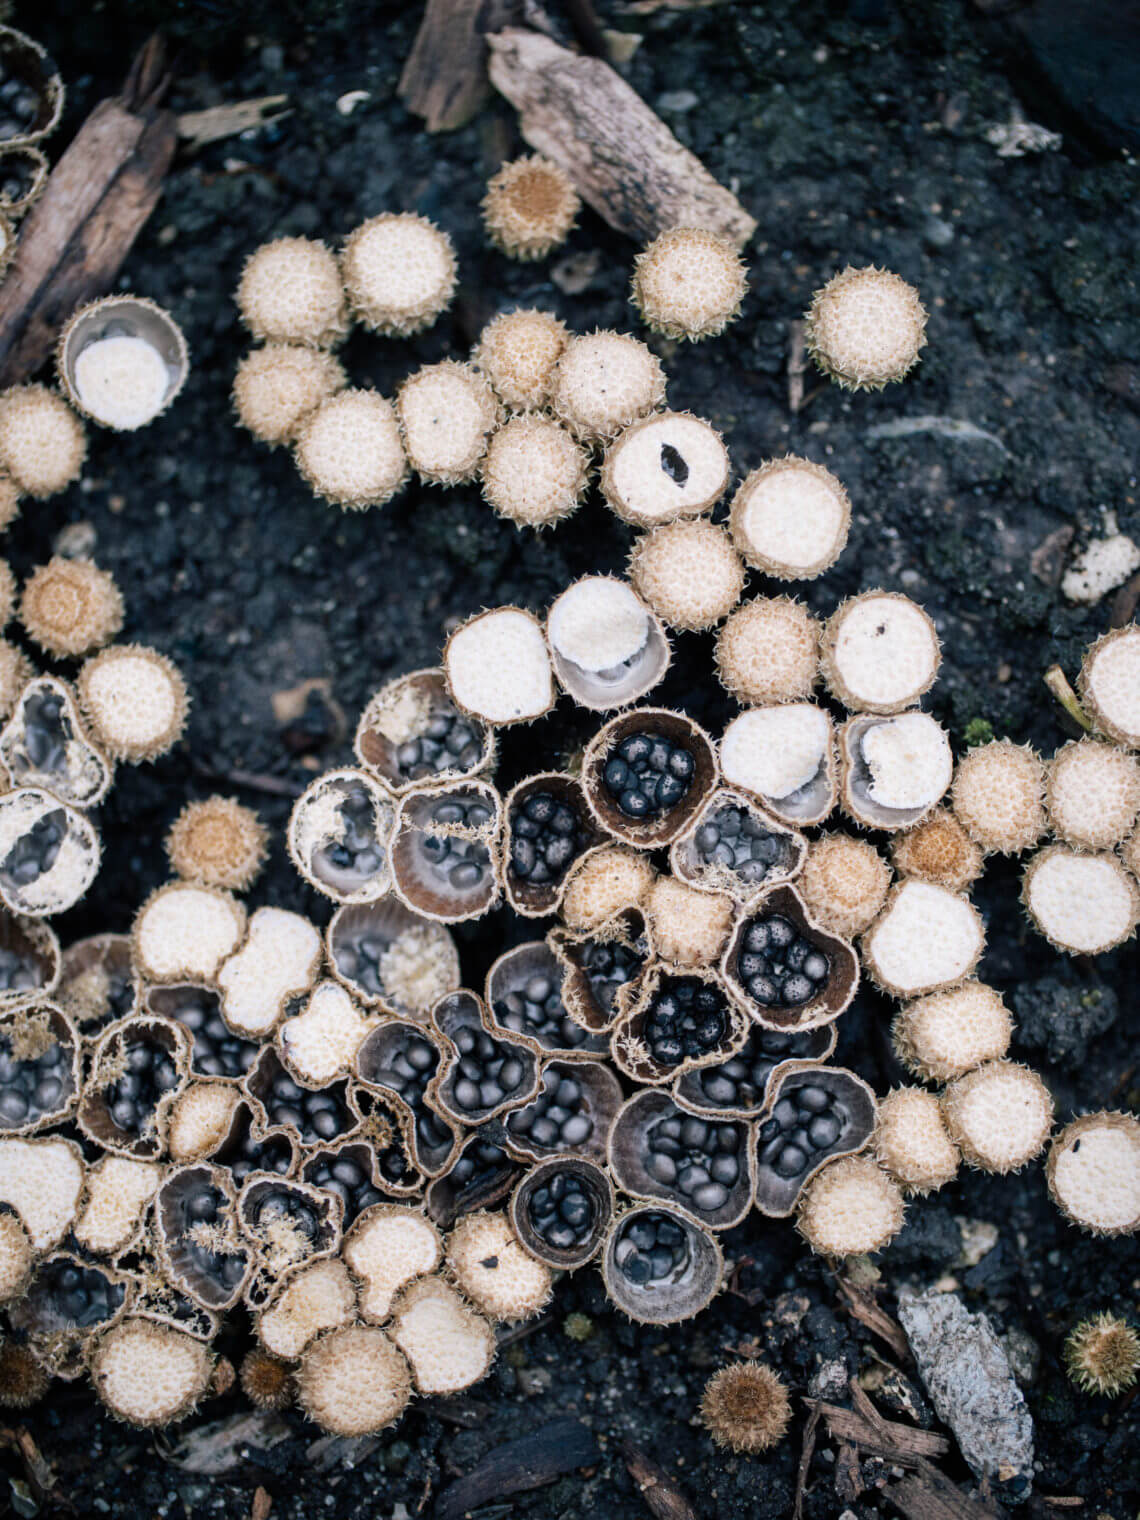 Bird's nest fungus: a mushroom that looks like a real nest